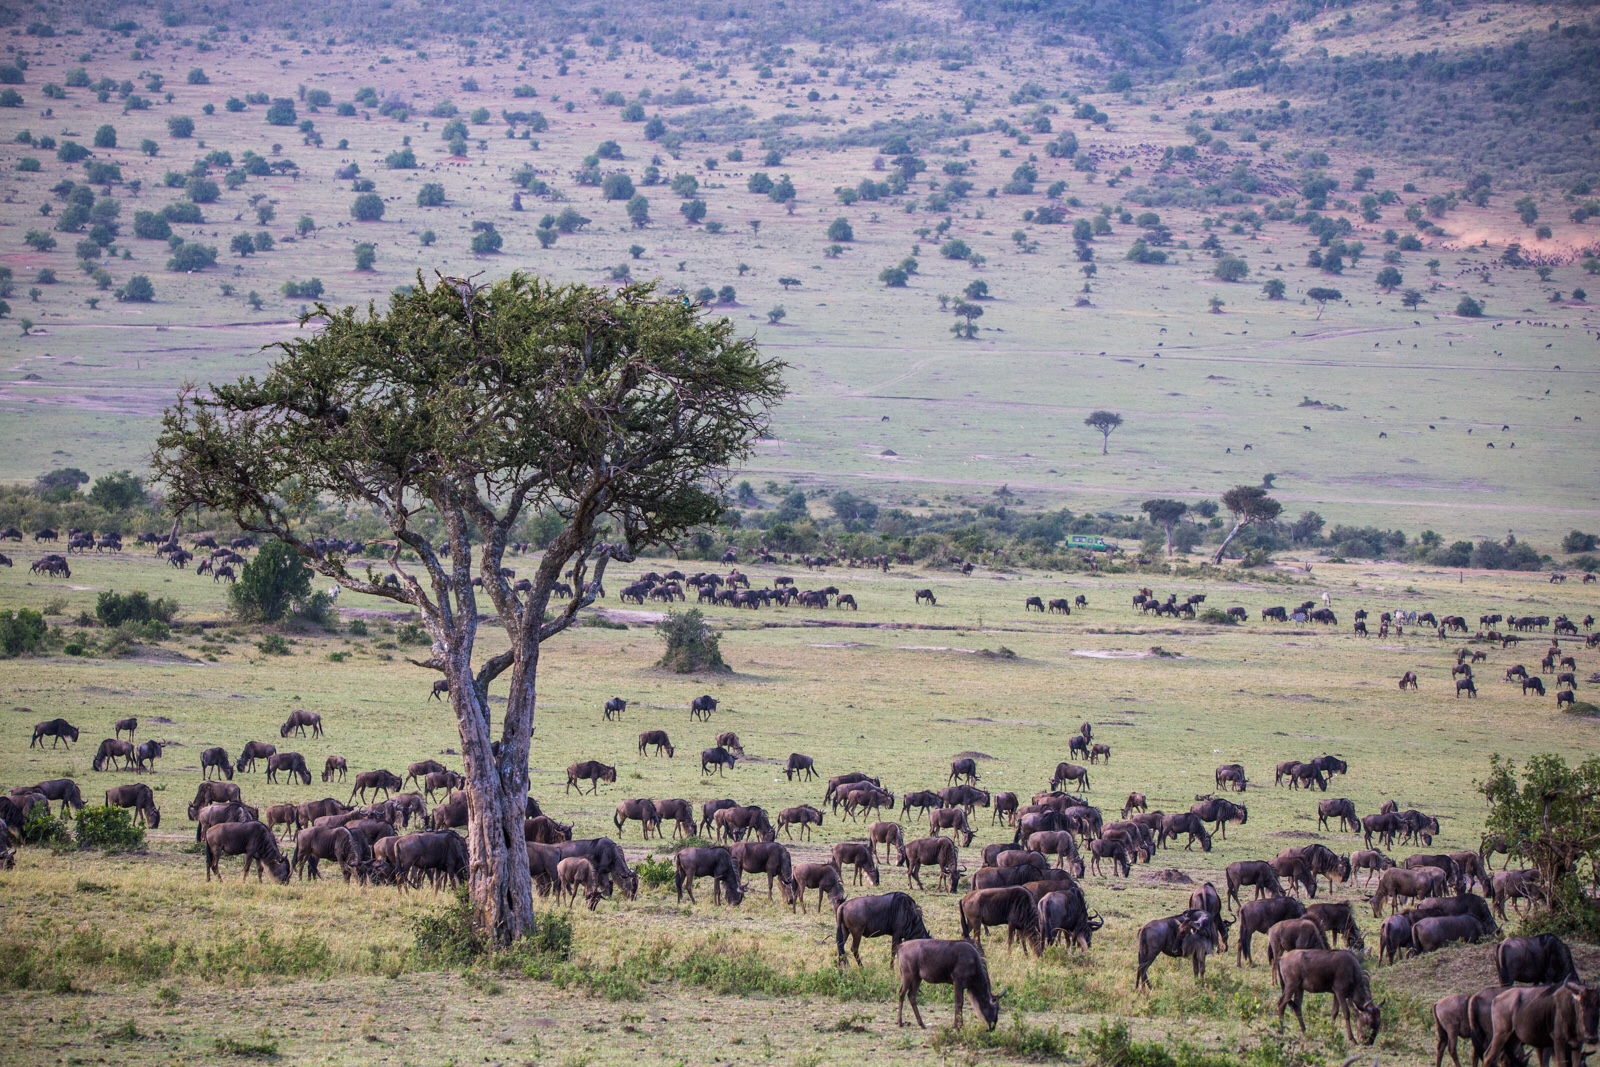 Countless wildebeests in the Maasai Mara.